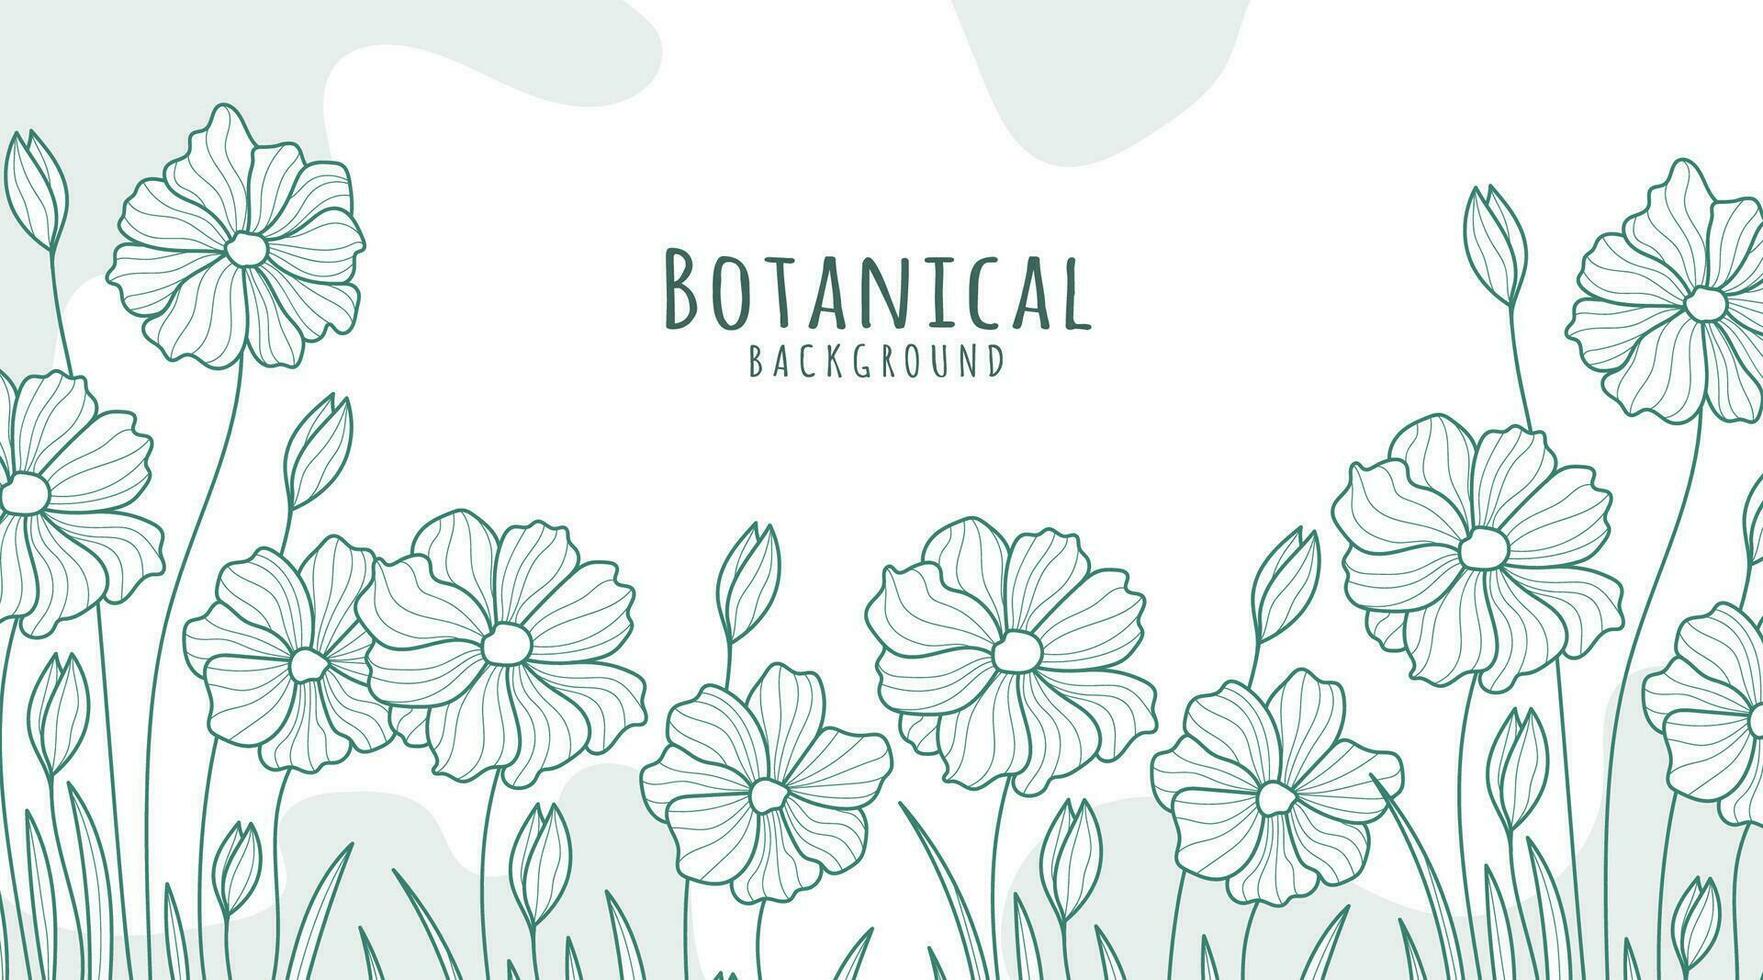 Botanical Line Art Background, Botanical Background, Leaves and Flower Background vector